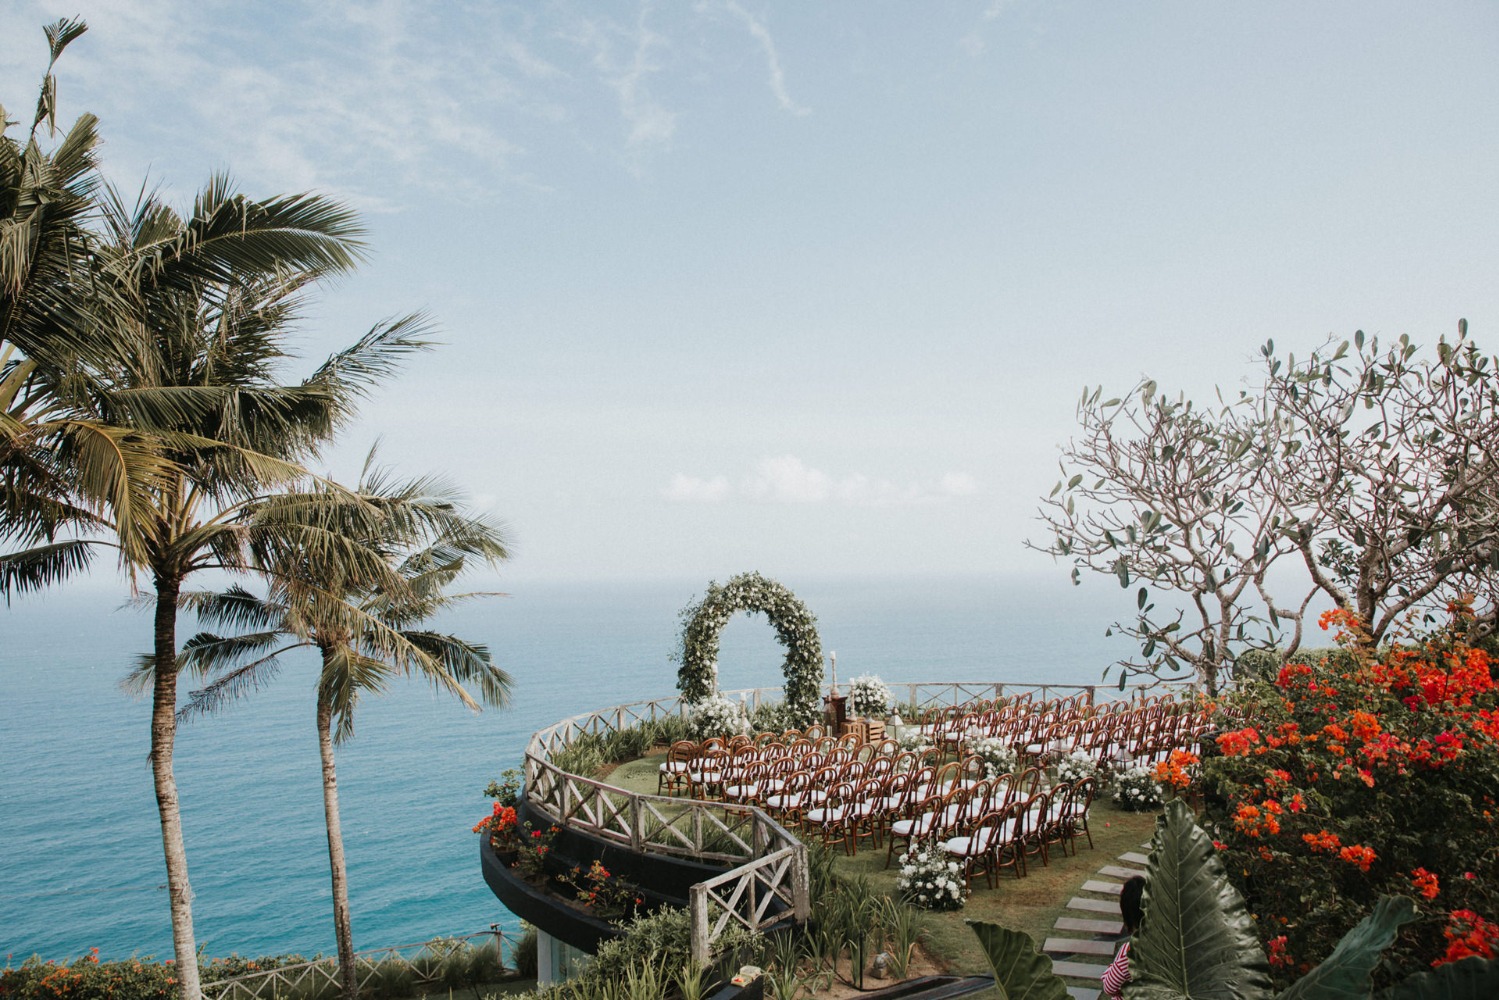 wedding ceremony in Bali